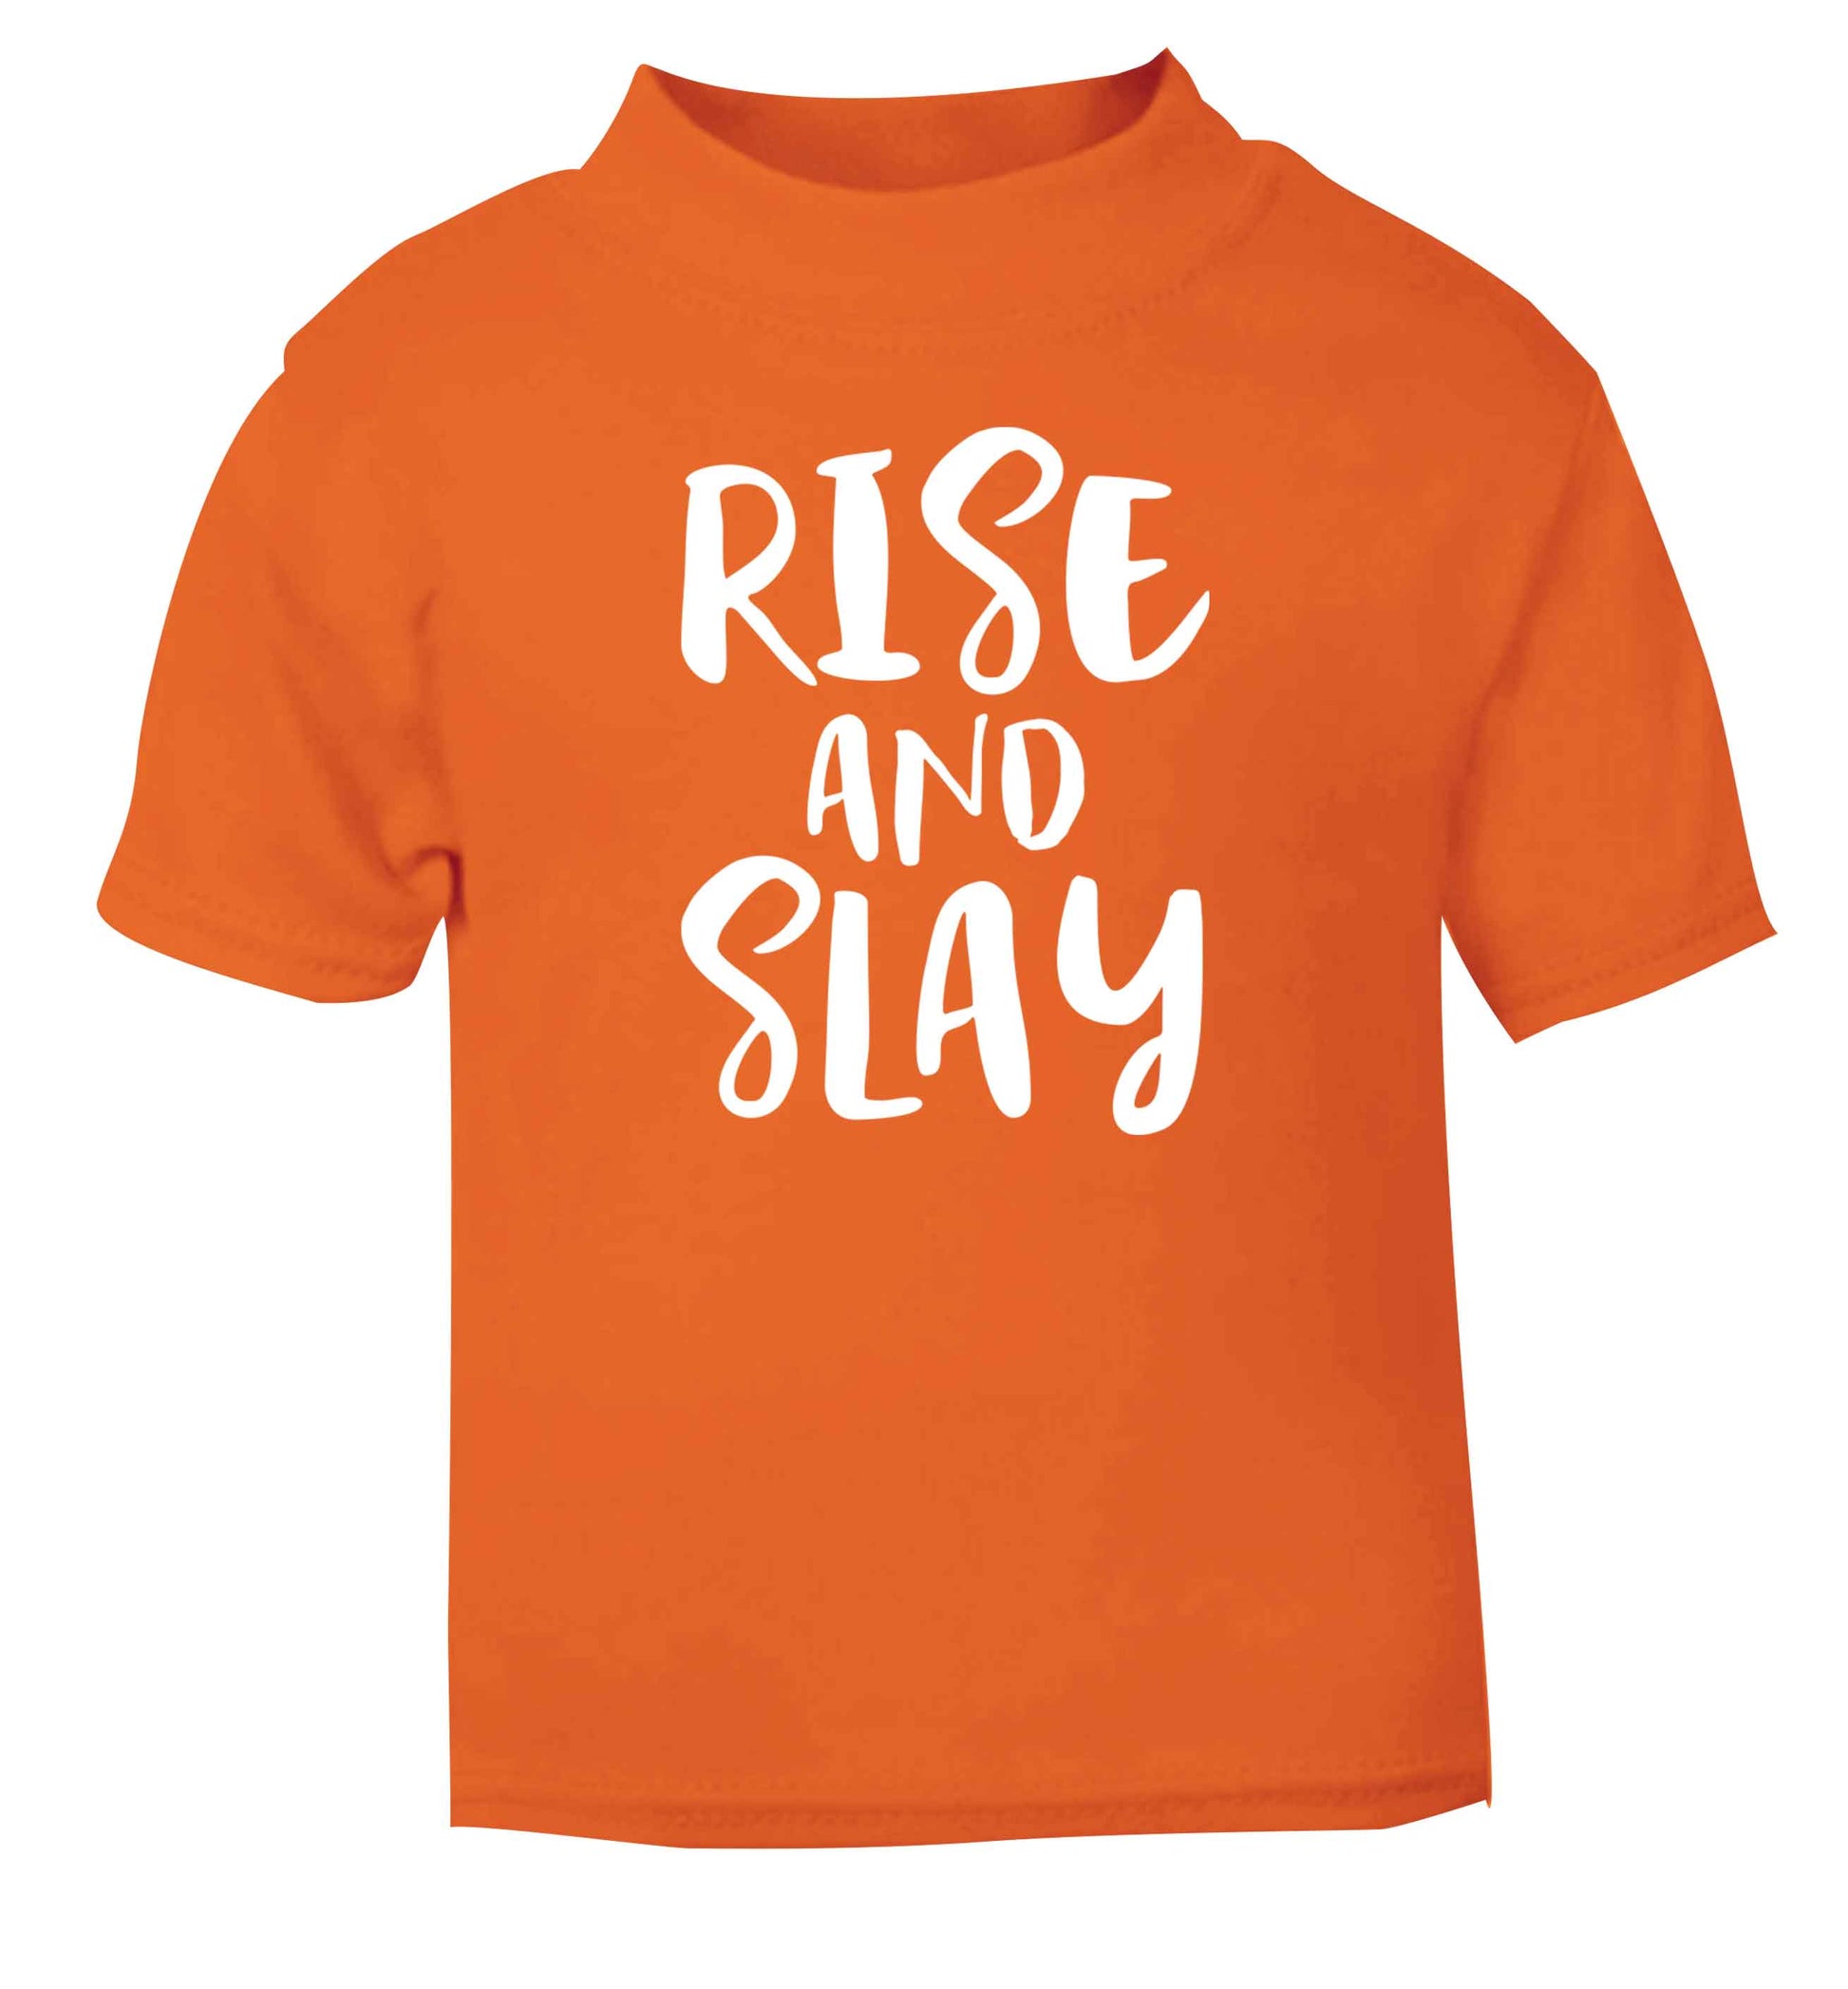 Rise and slay orange Baby Toddler Tshirt 2 Years